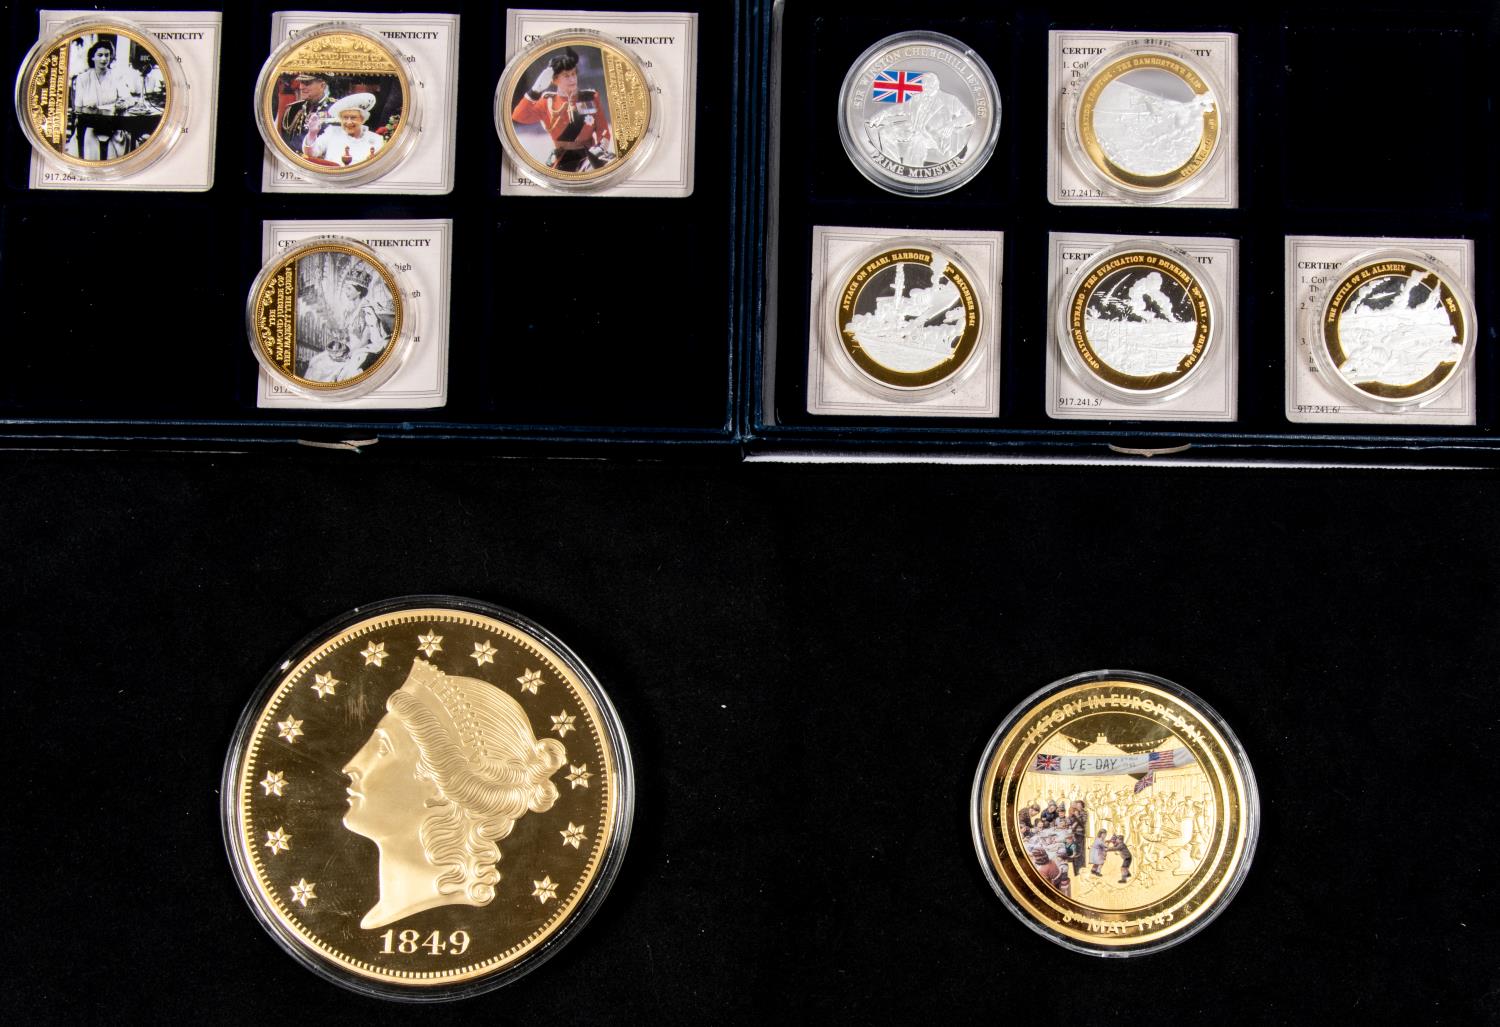 Windsor Mint: Queen Elizabeth II diamond jubilee commemorative medallions, produced in copper and